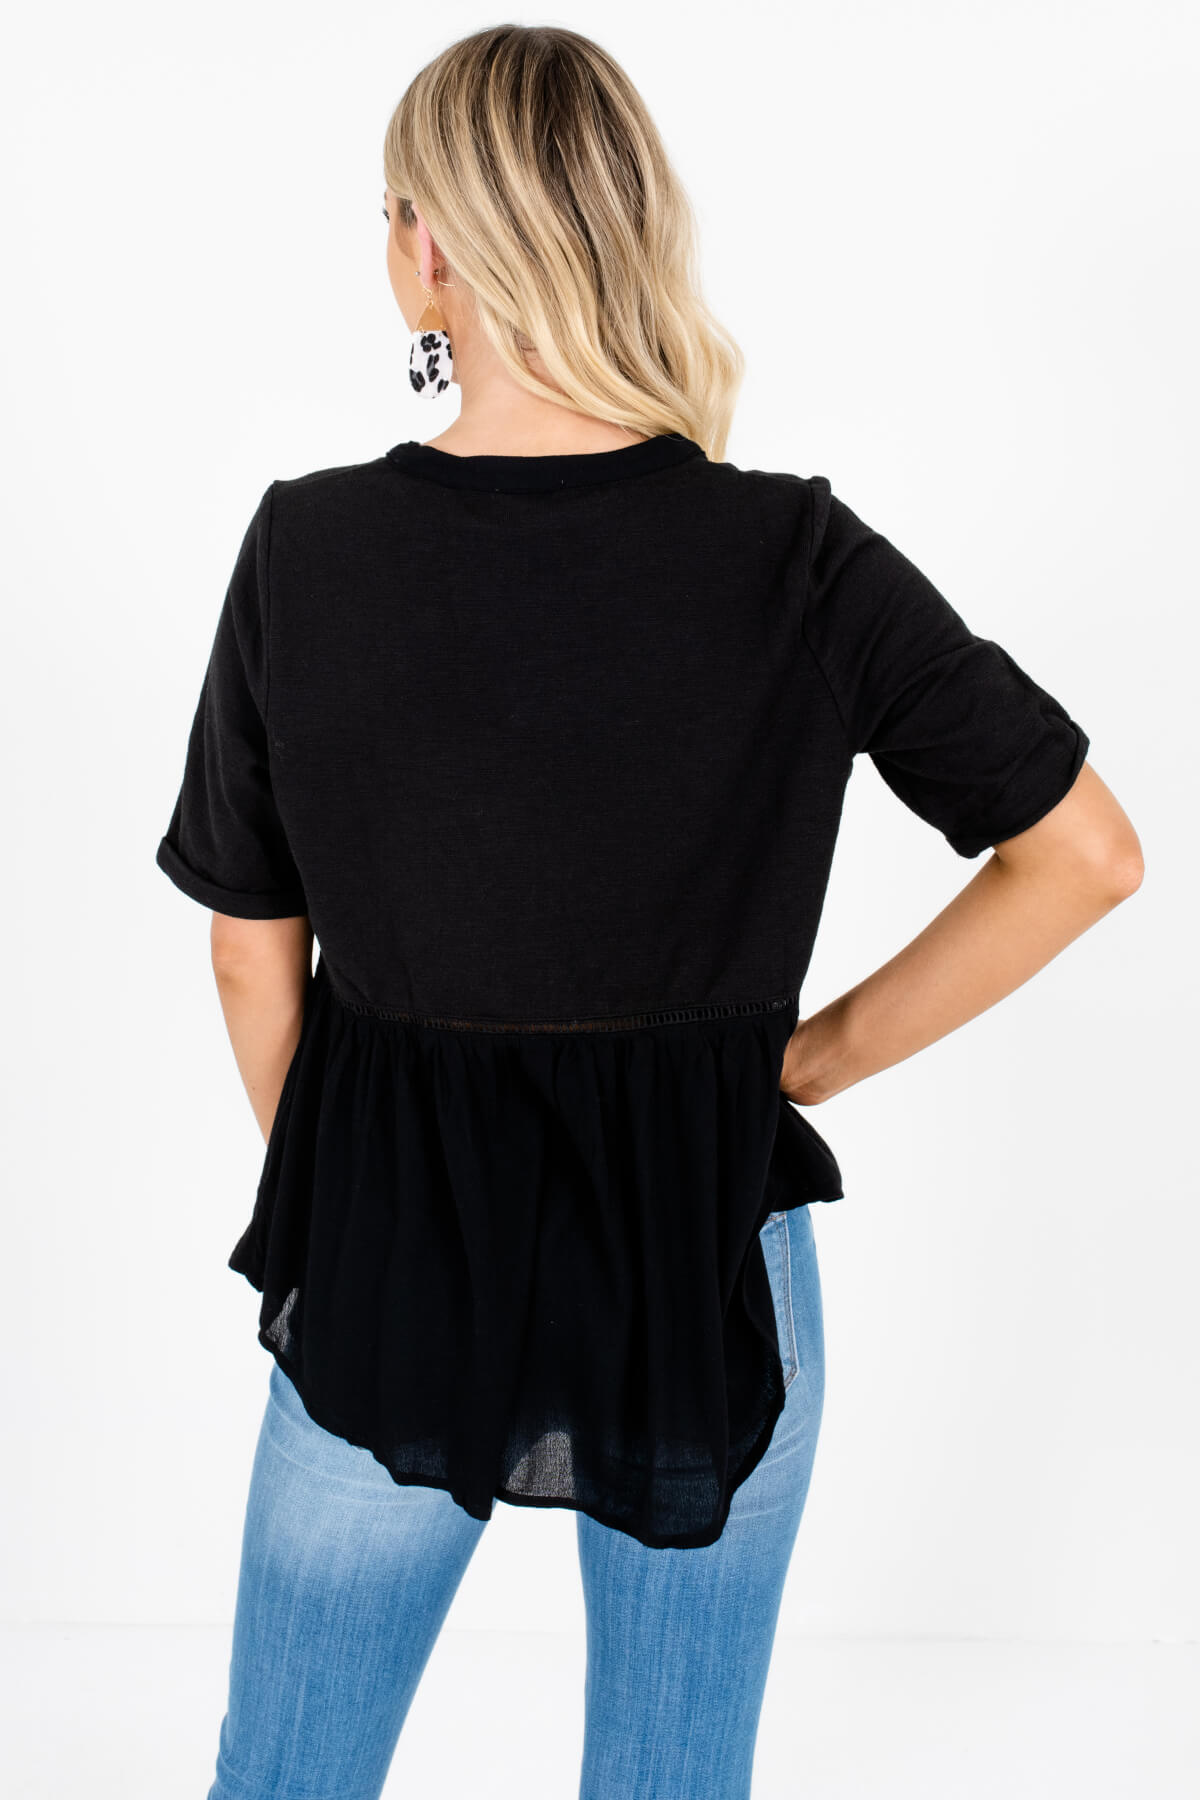 Black Comfy Button-Up Tops Affordable Online Boutique